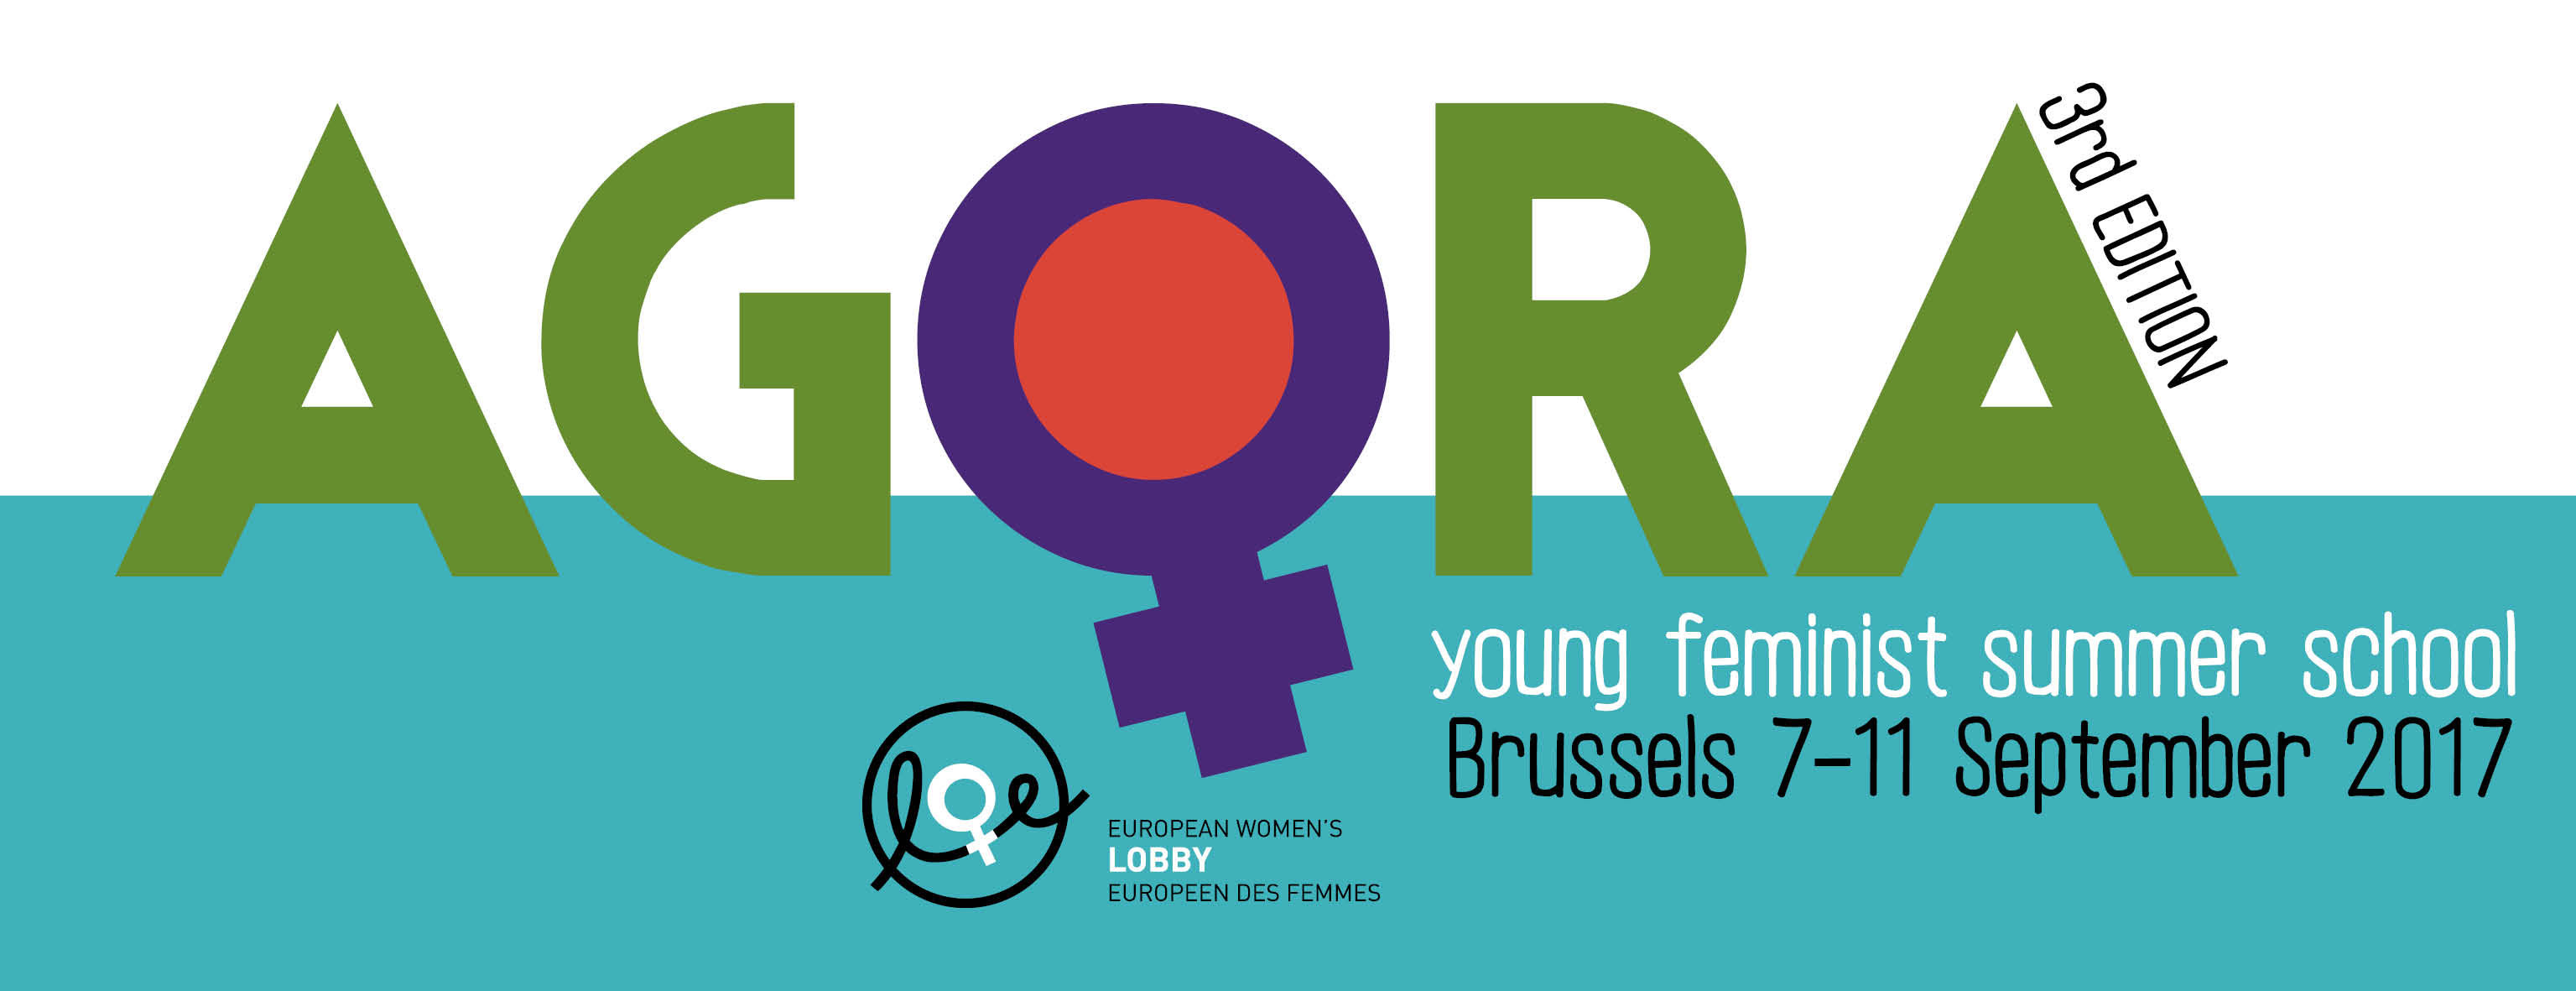 European Women’s Lobby AGORA Feminist Summer School Brussels